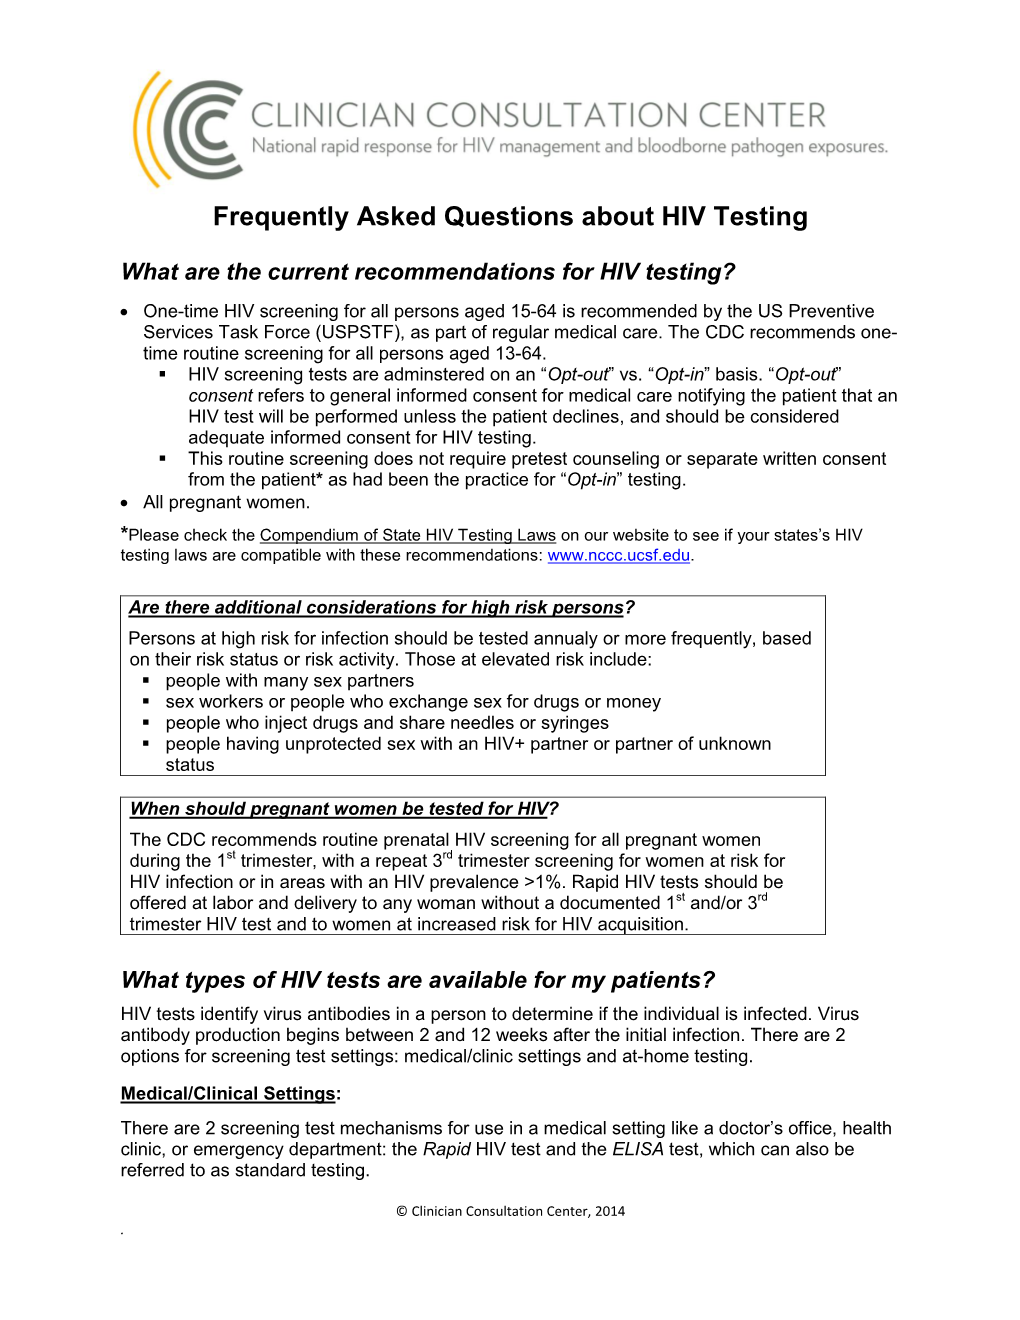 CCC HIV Testing